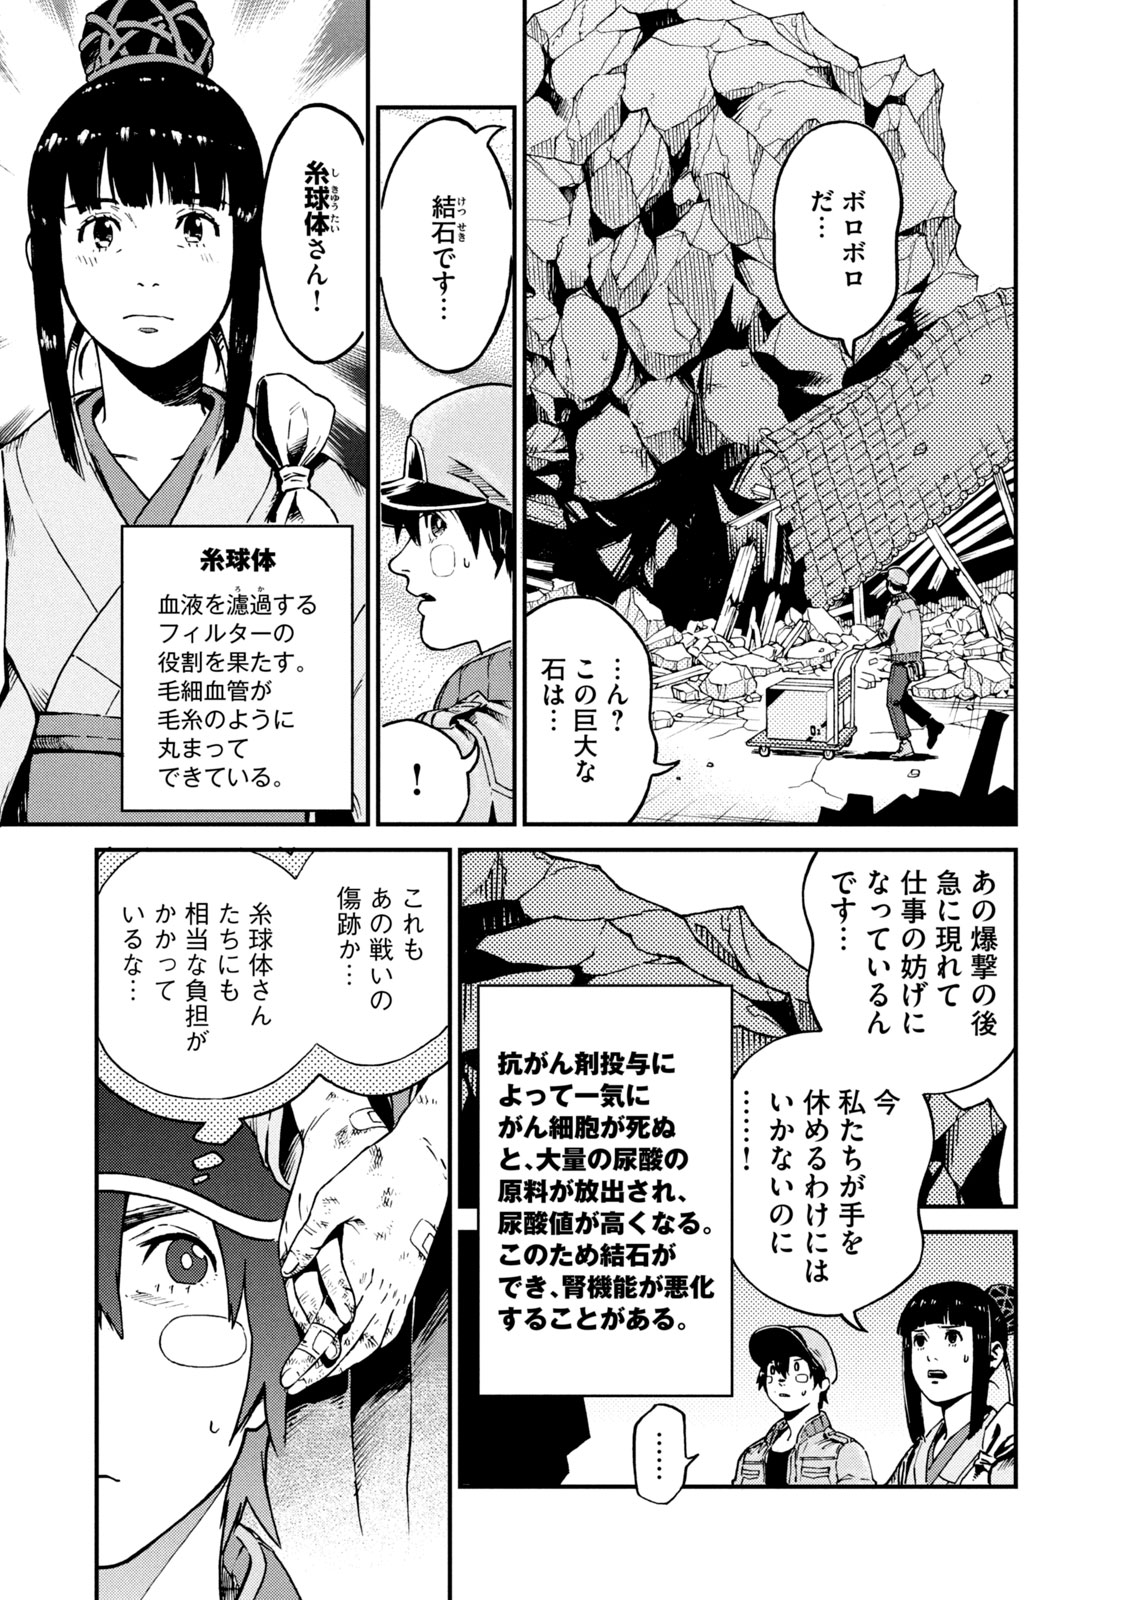 Hataraku Saibou BLACK - Chapter 42 - Page 9